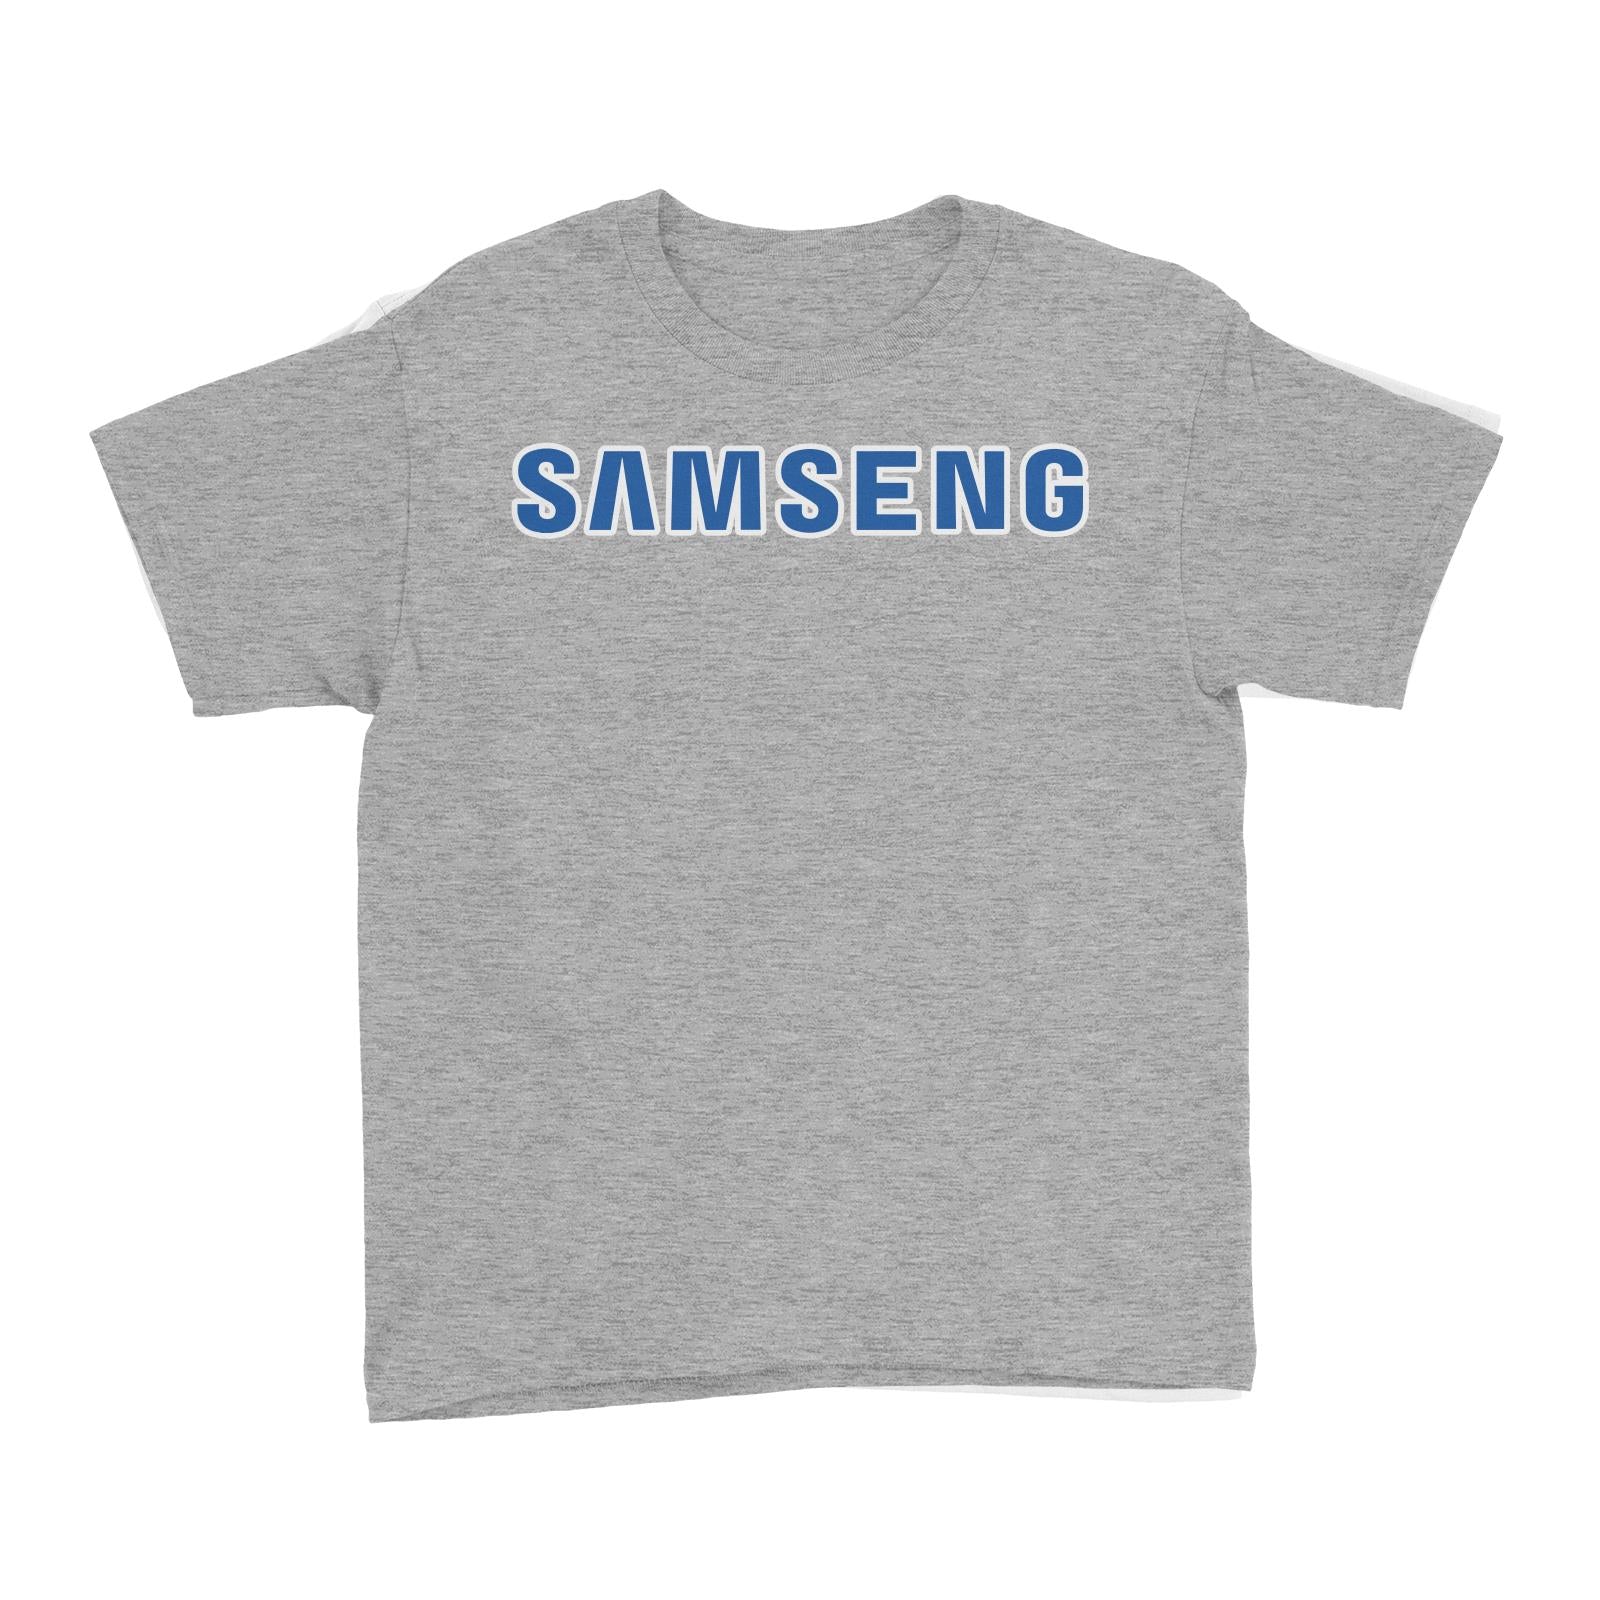 Slang Statement Samseng Kid's T-Shirt